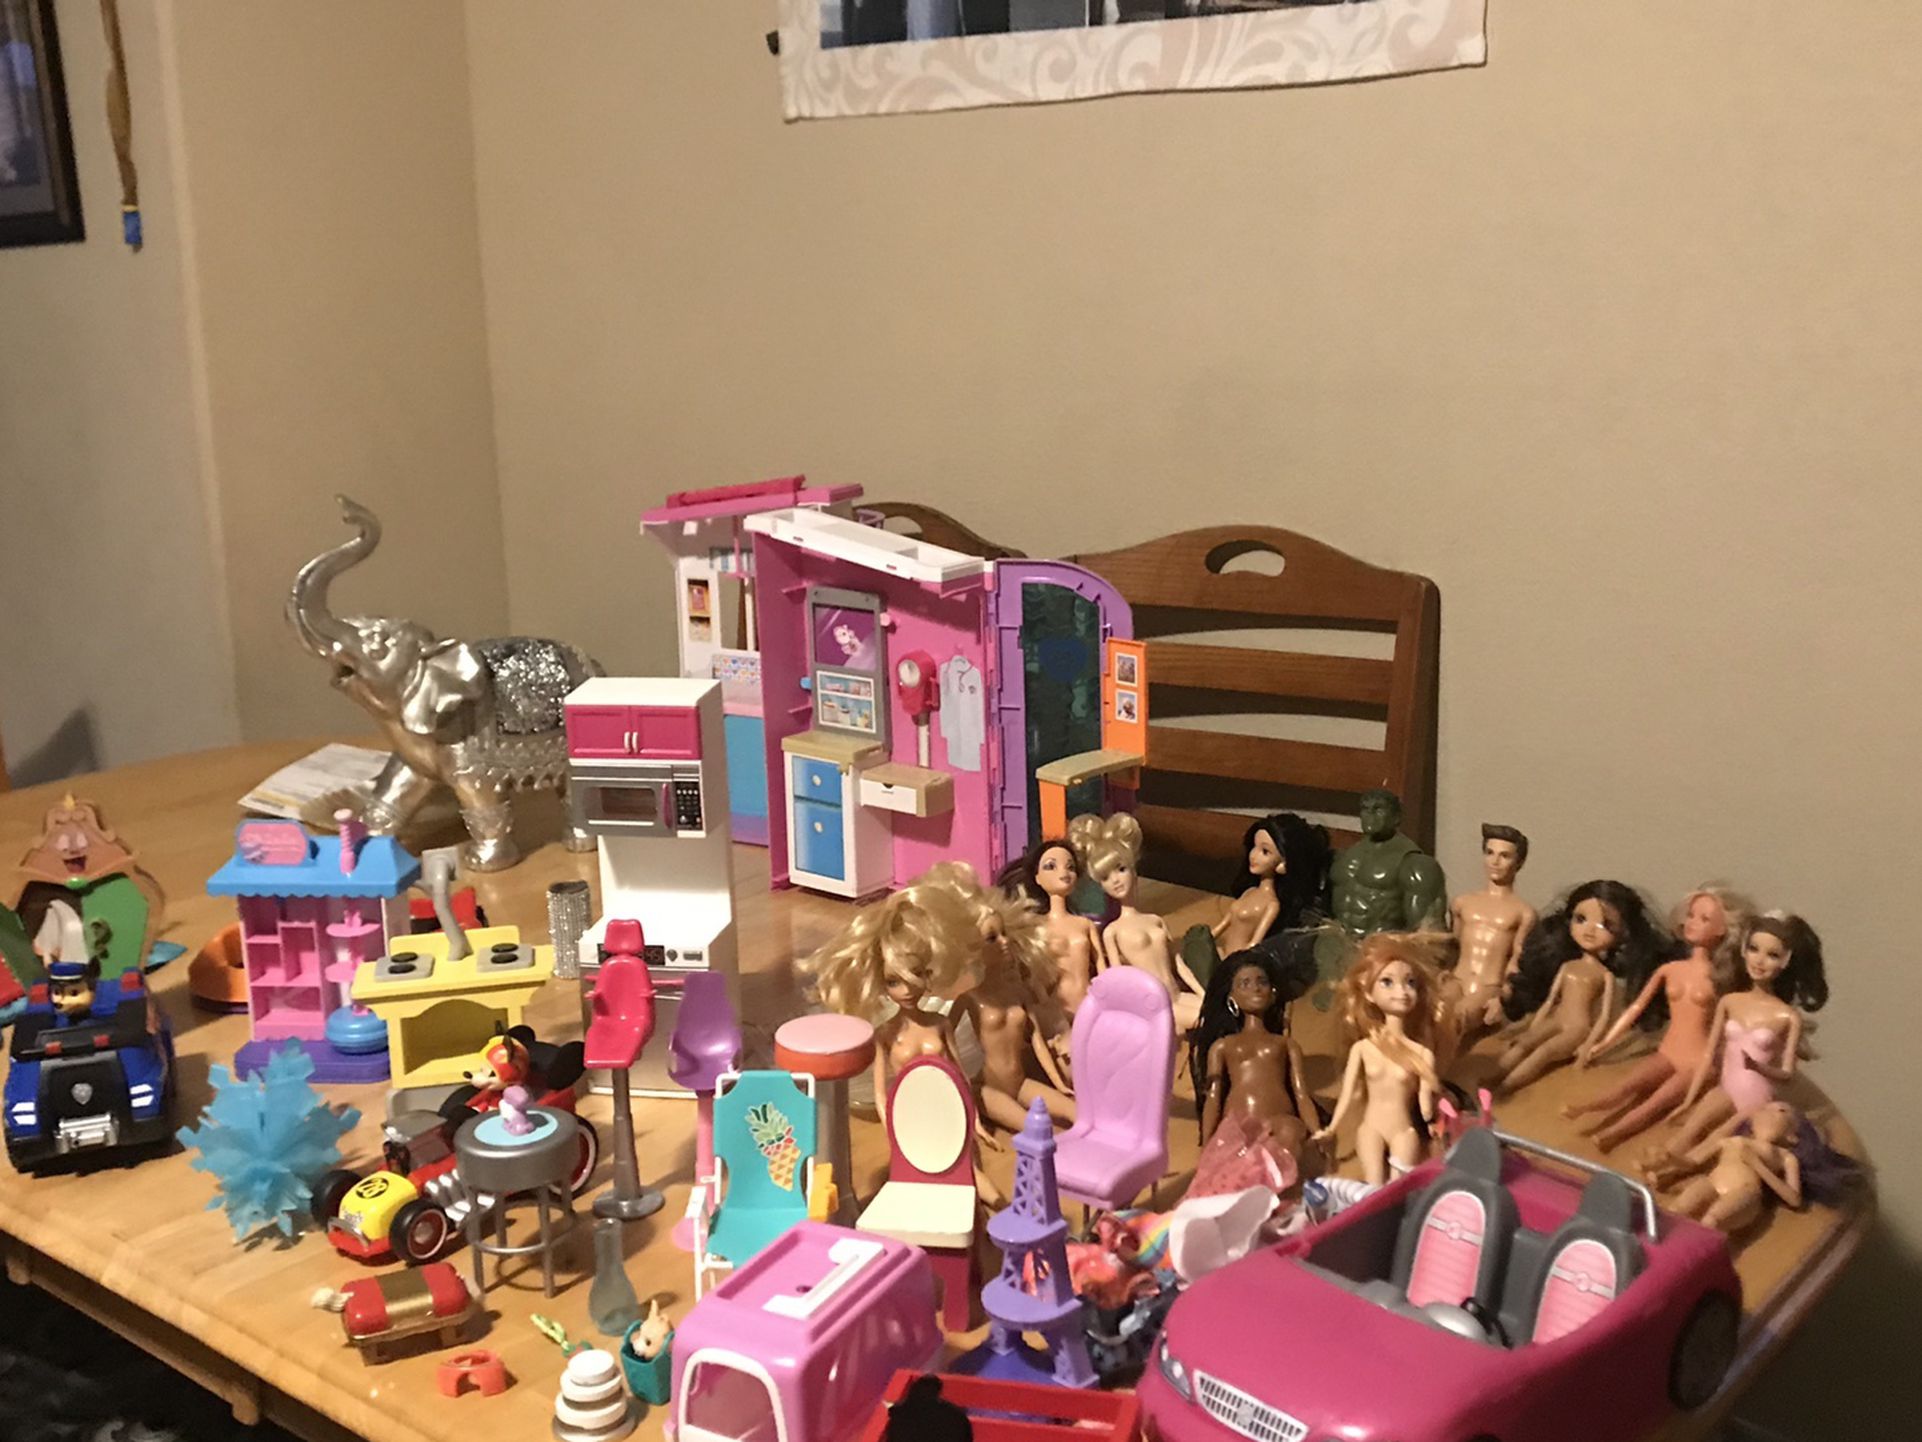 Barbie, And Shopkin Toys